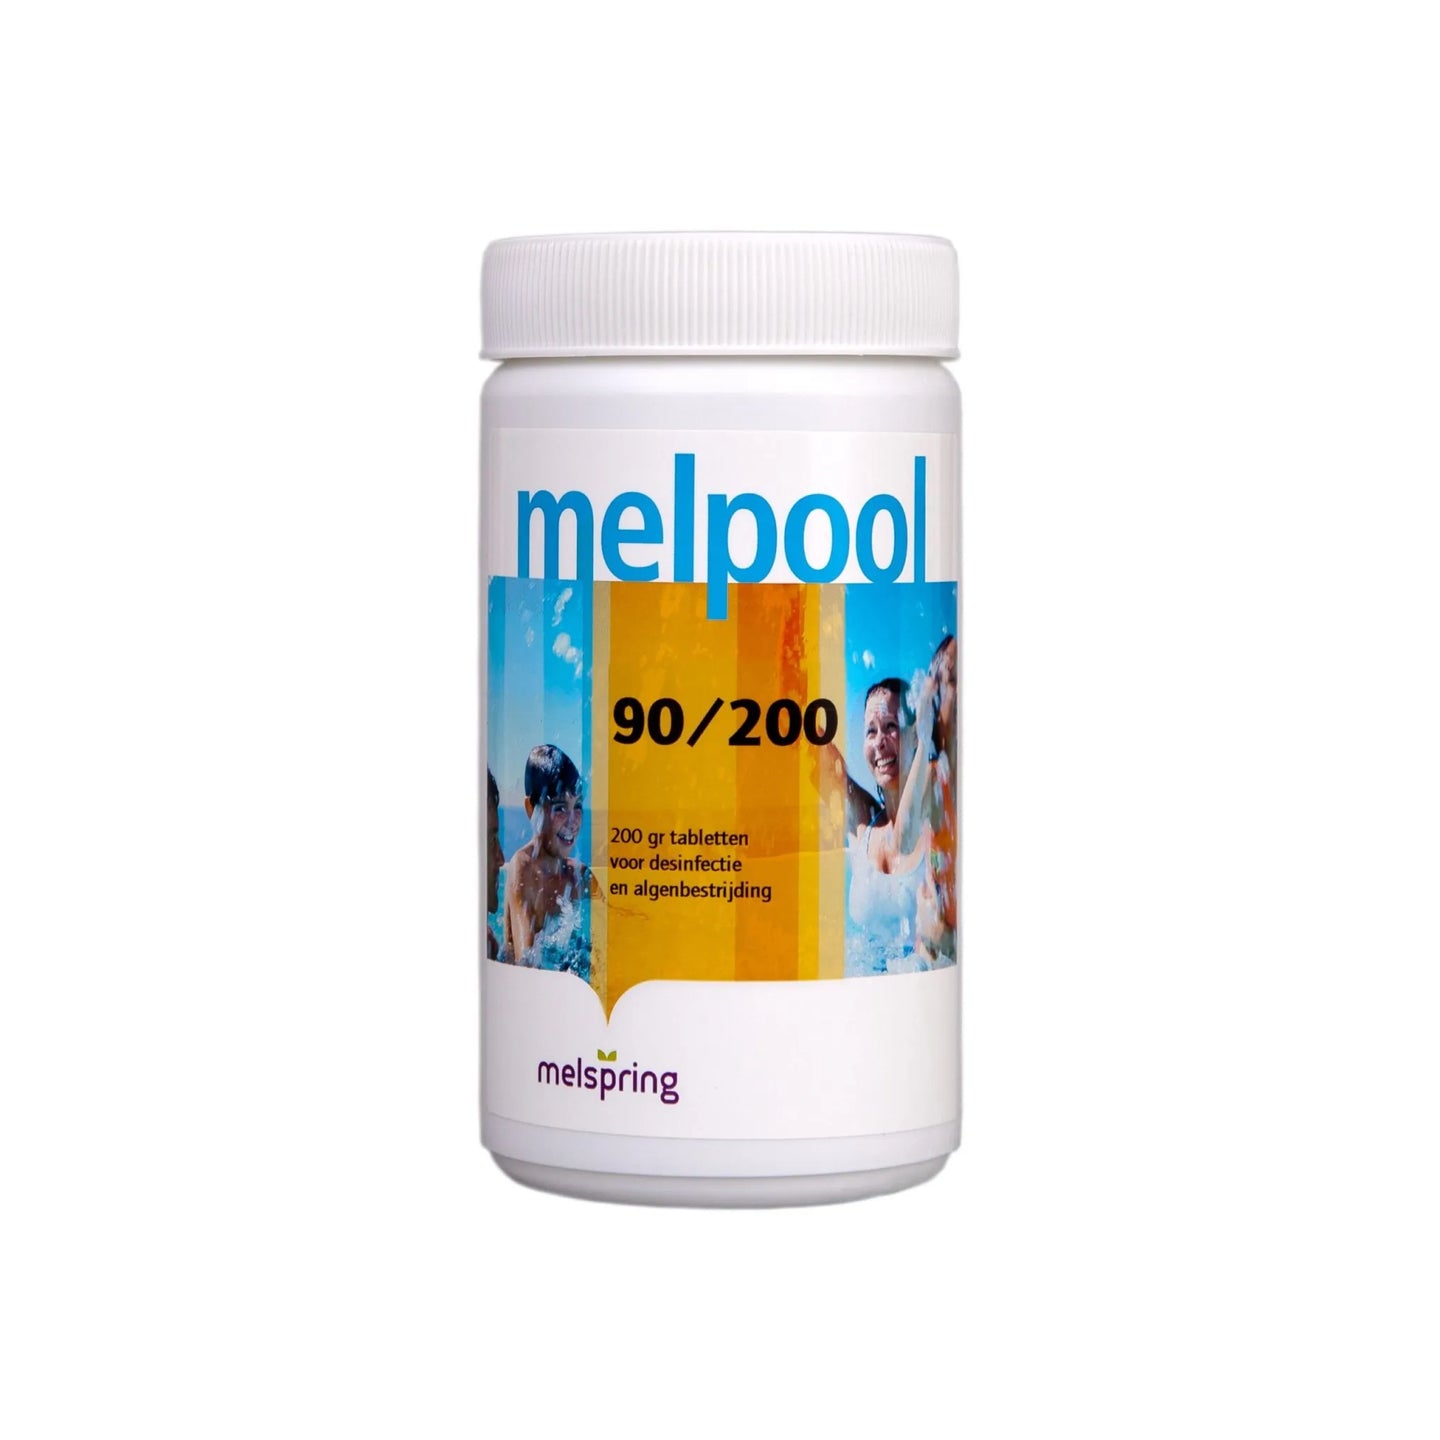 Chloortabletten 90/200 (200gram) Melpool 1kg